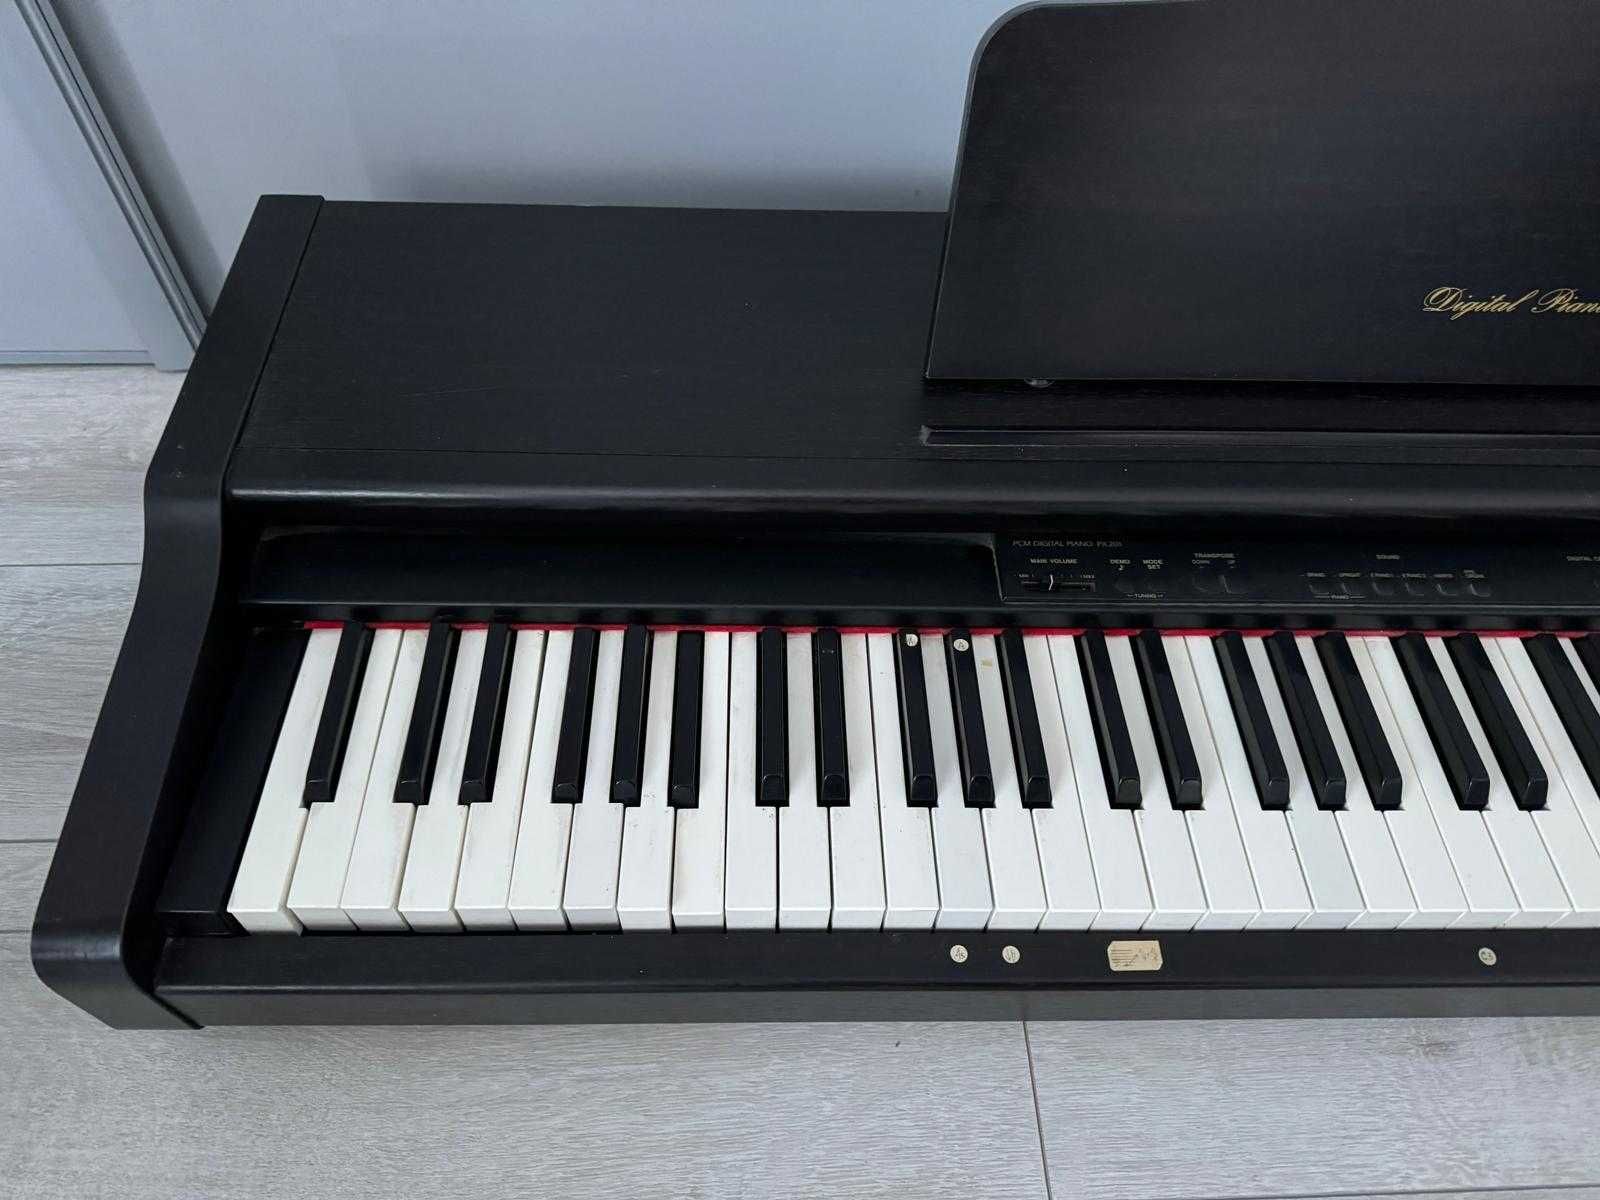 Pianino Cyfrowe 88-klawiszy Technics SX-PX201 Unikat